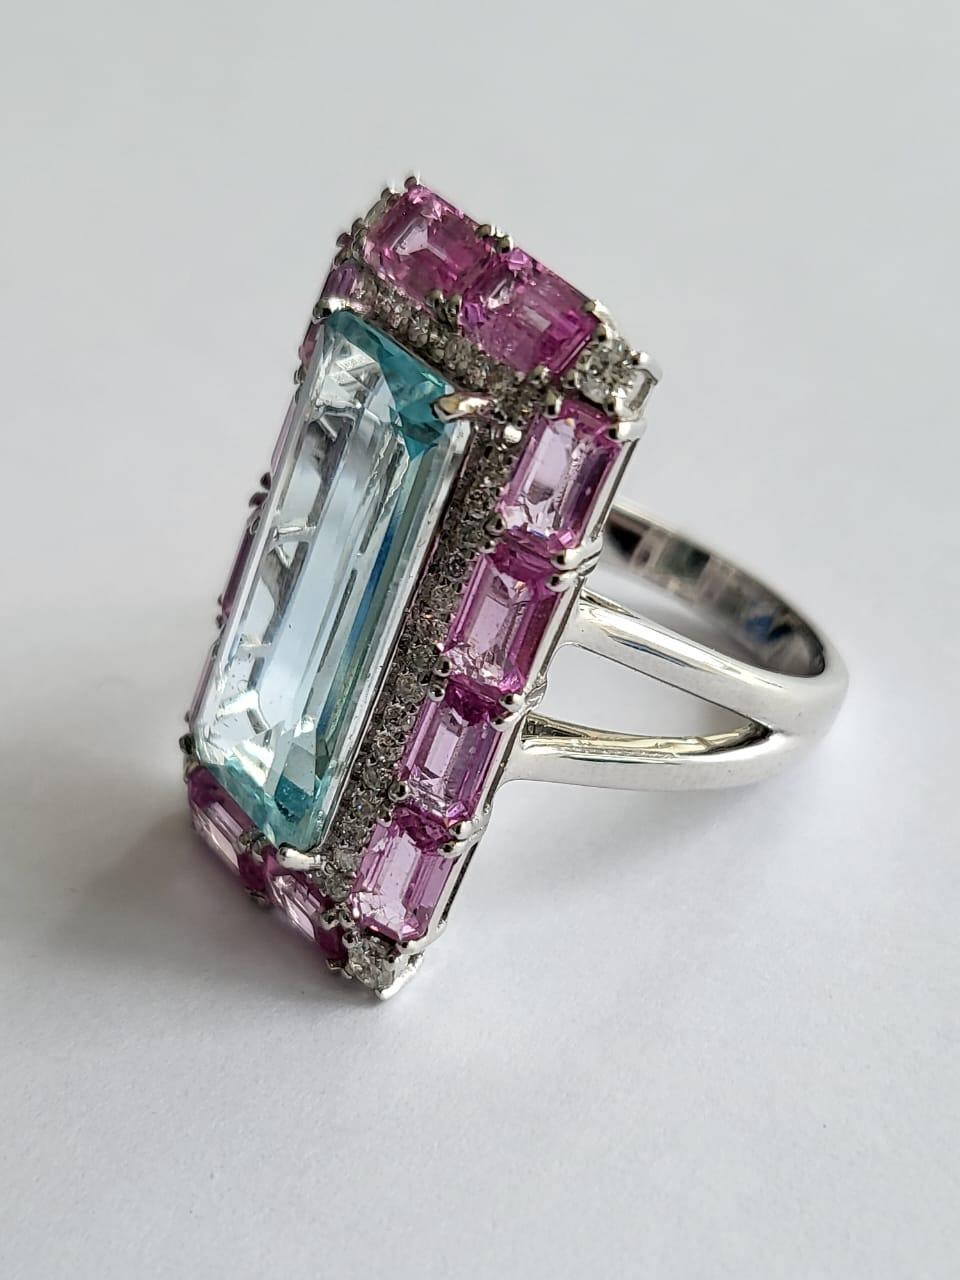 Emerald Cut Set in 18k Gold, 4.45 Carats Aquamarine, Pink Sapphires & Diamonds Cocktail Ring